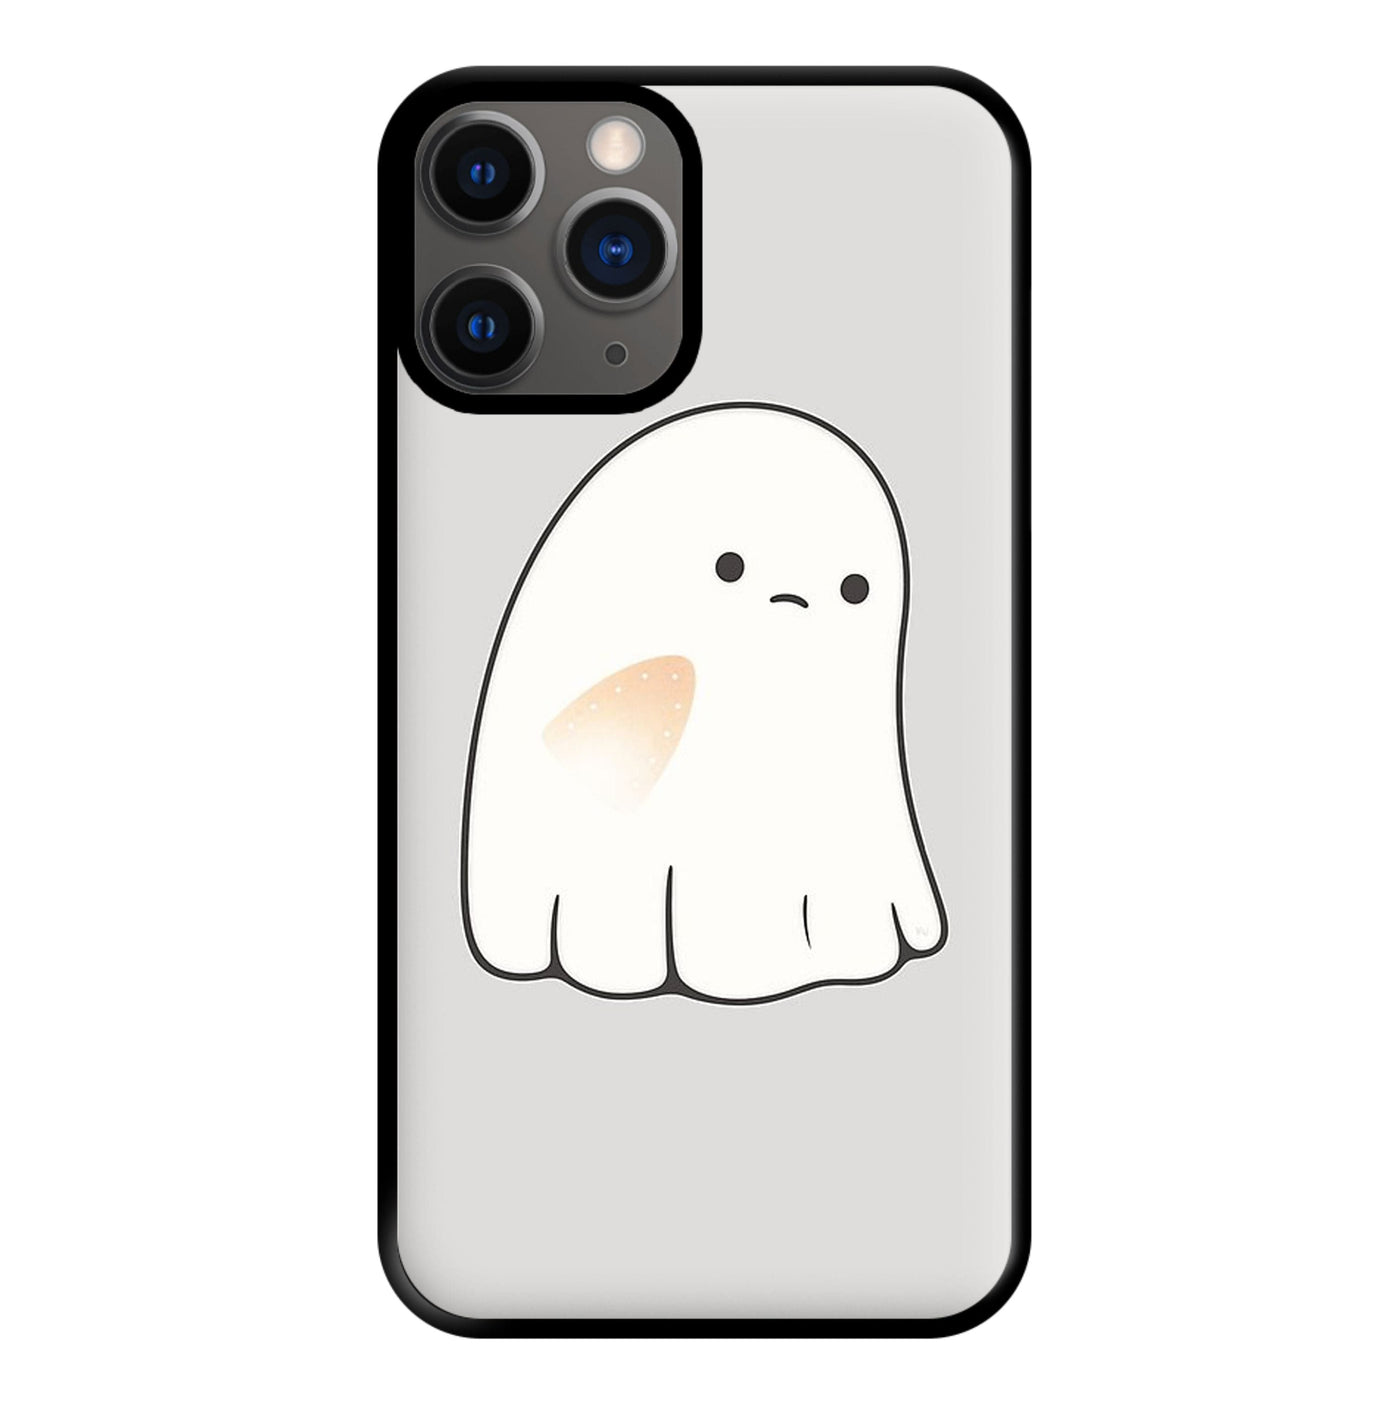 Sad Ghost Halloween Phone Case